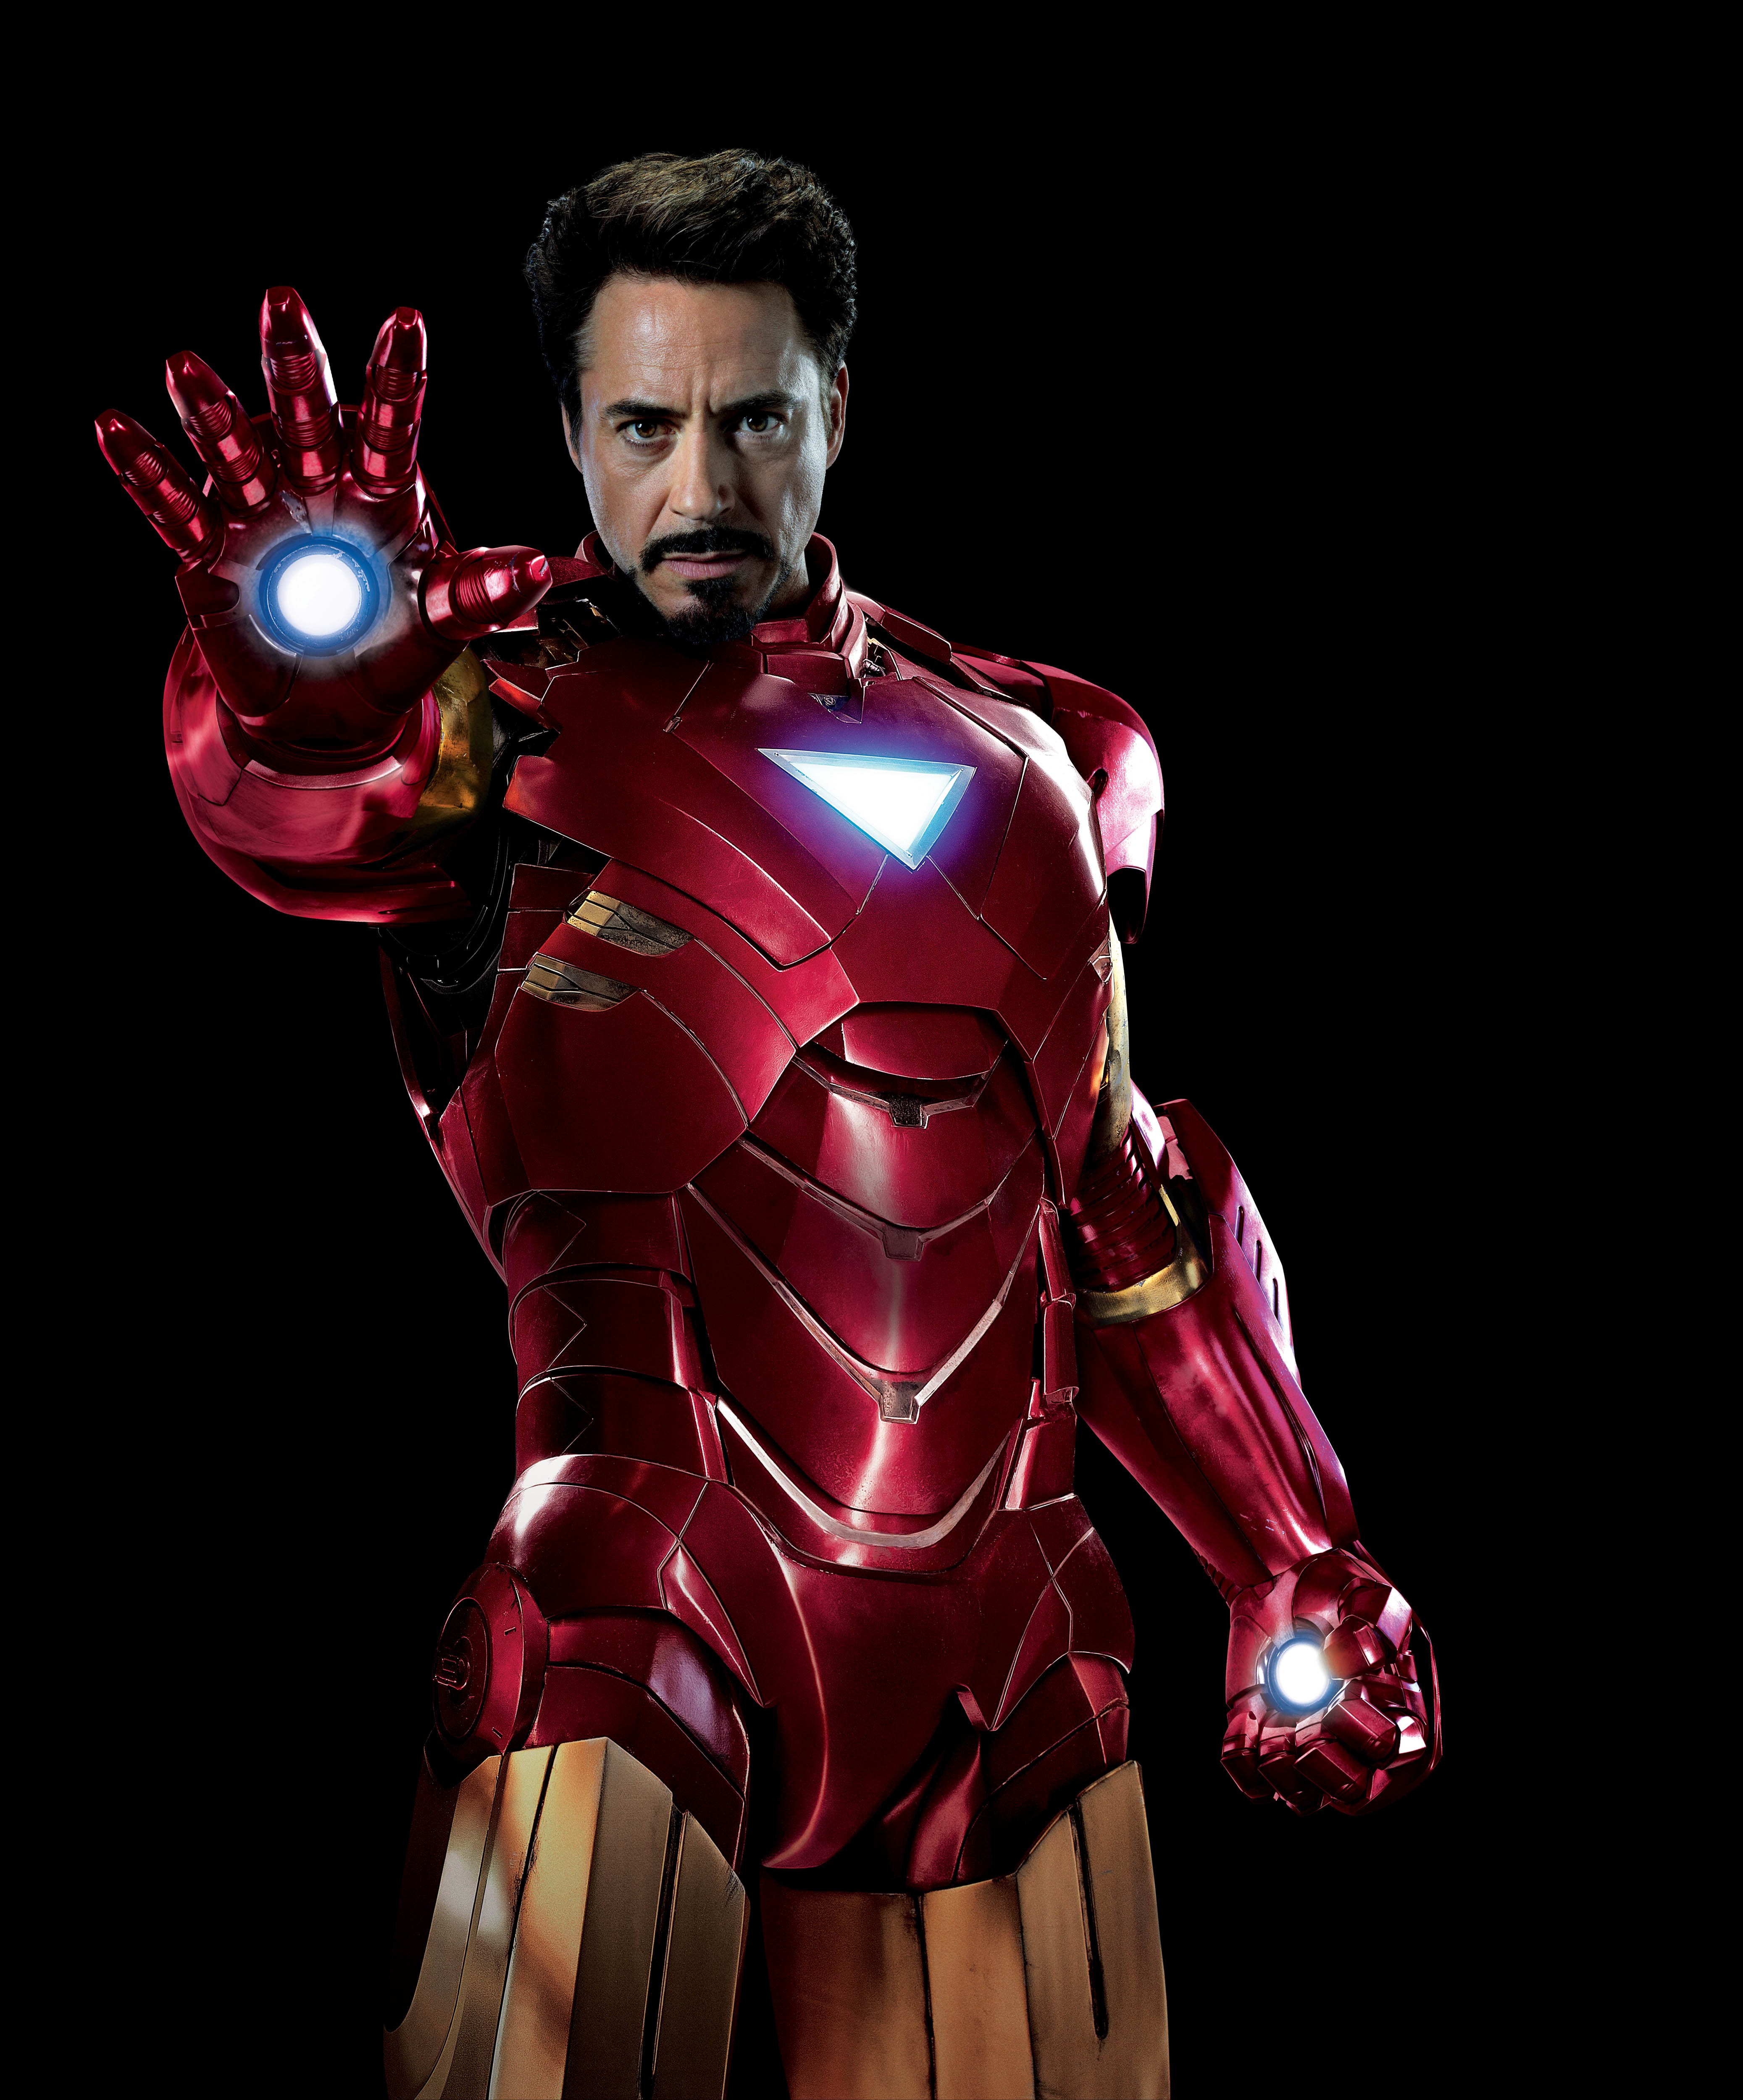 Iron Man, comics, superheroes, Tony Stark, Robert Downey Jr, artwork - desktop wallpaper